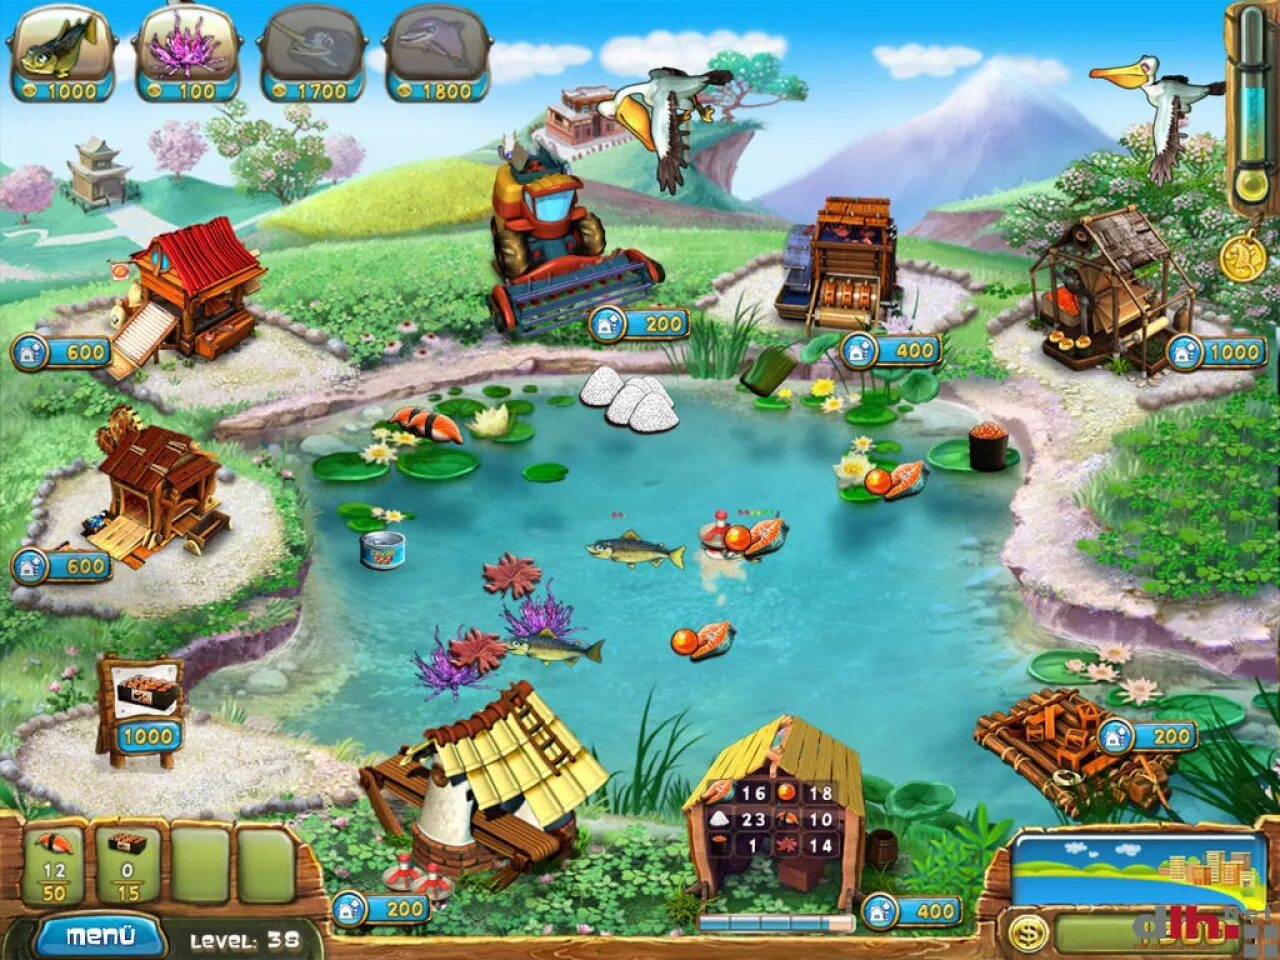 Fish Farm игра. Fish Farm 2 игра. Морская ферма игра. Fisher's Family Farm. Игры на смартфон фермы